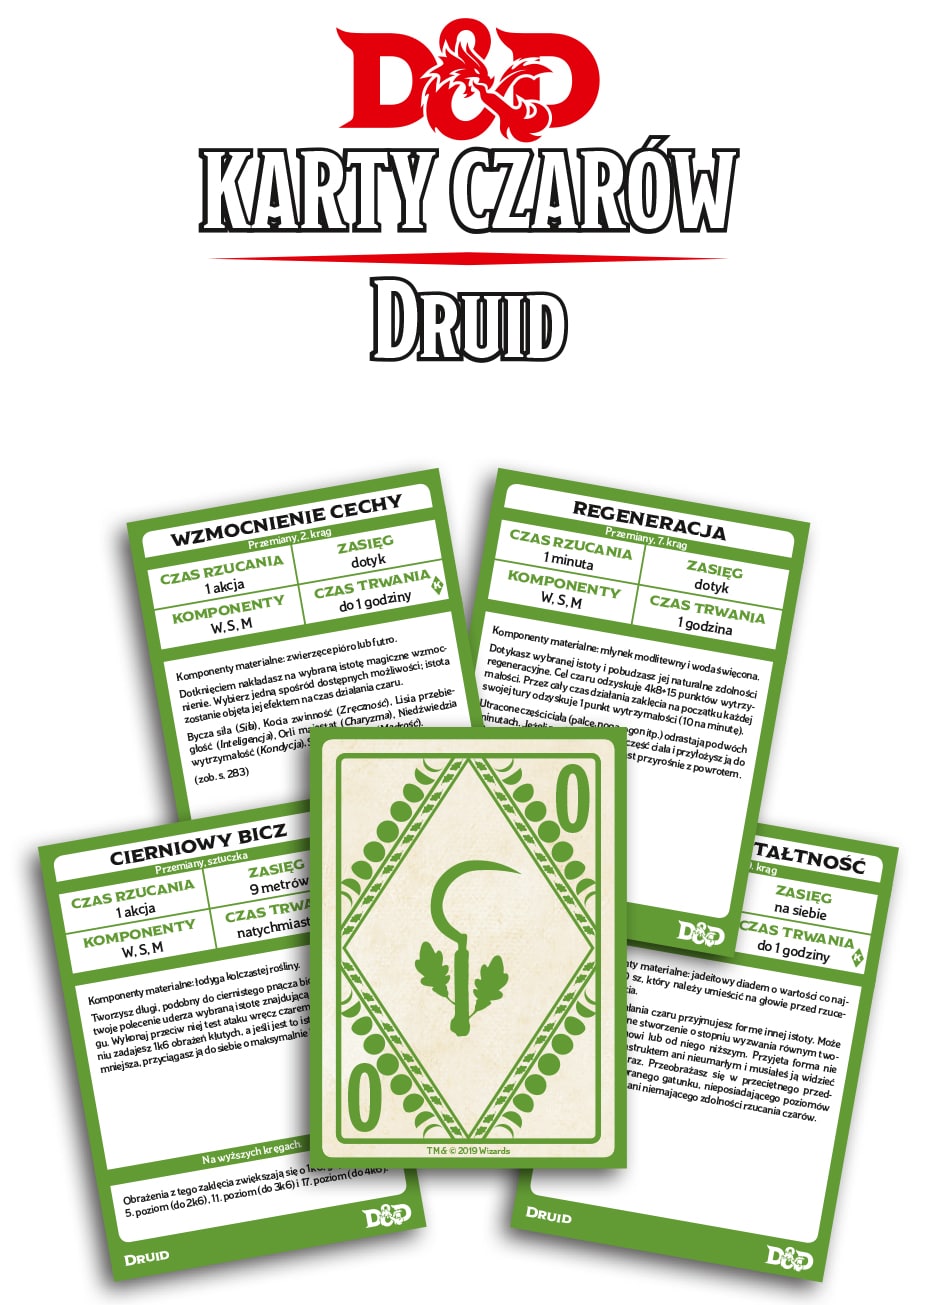 Dungeons & Dragons: Karty czarów - Druid - 2